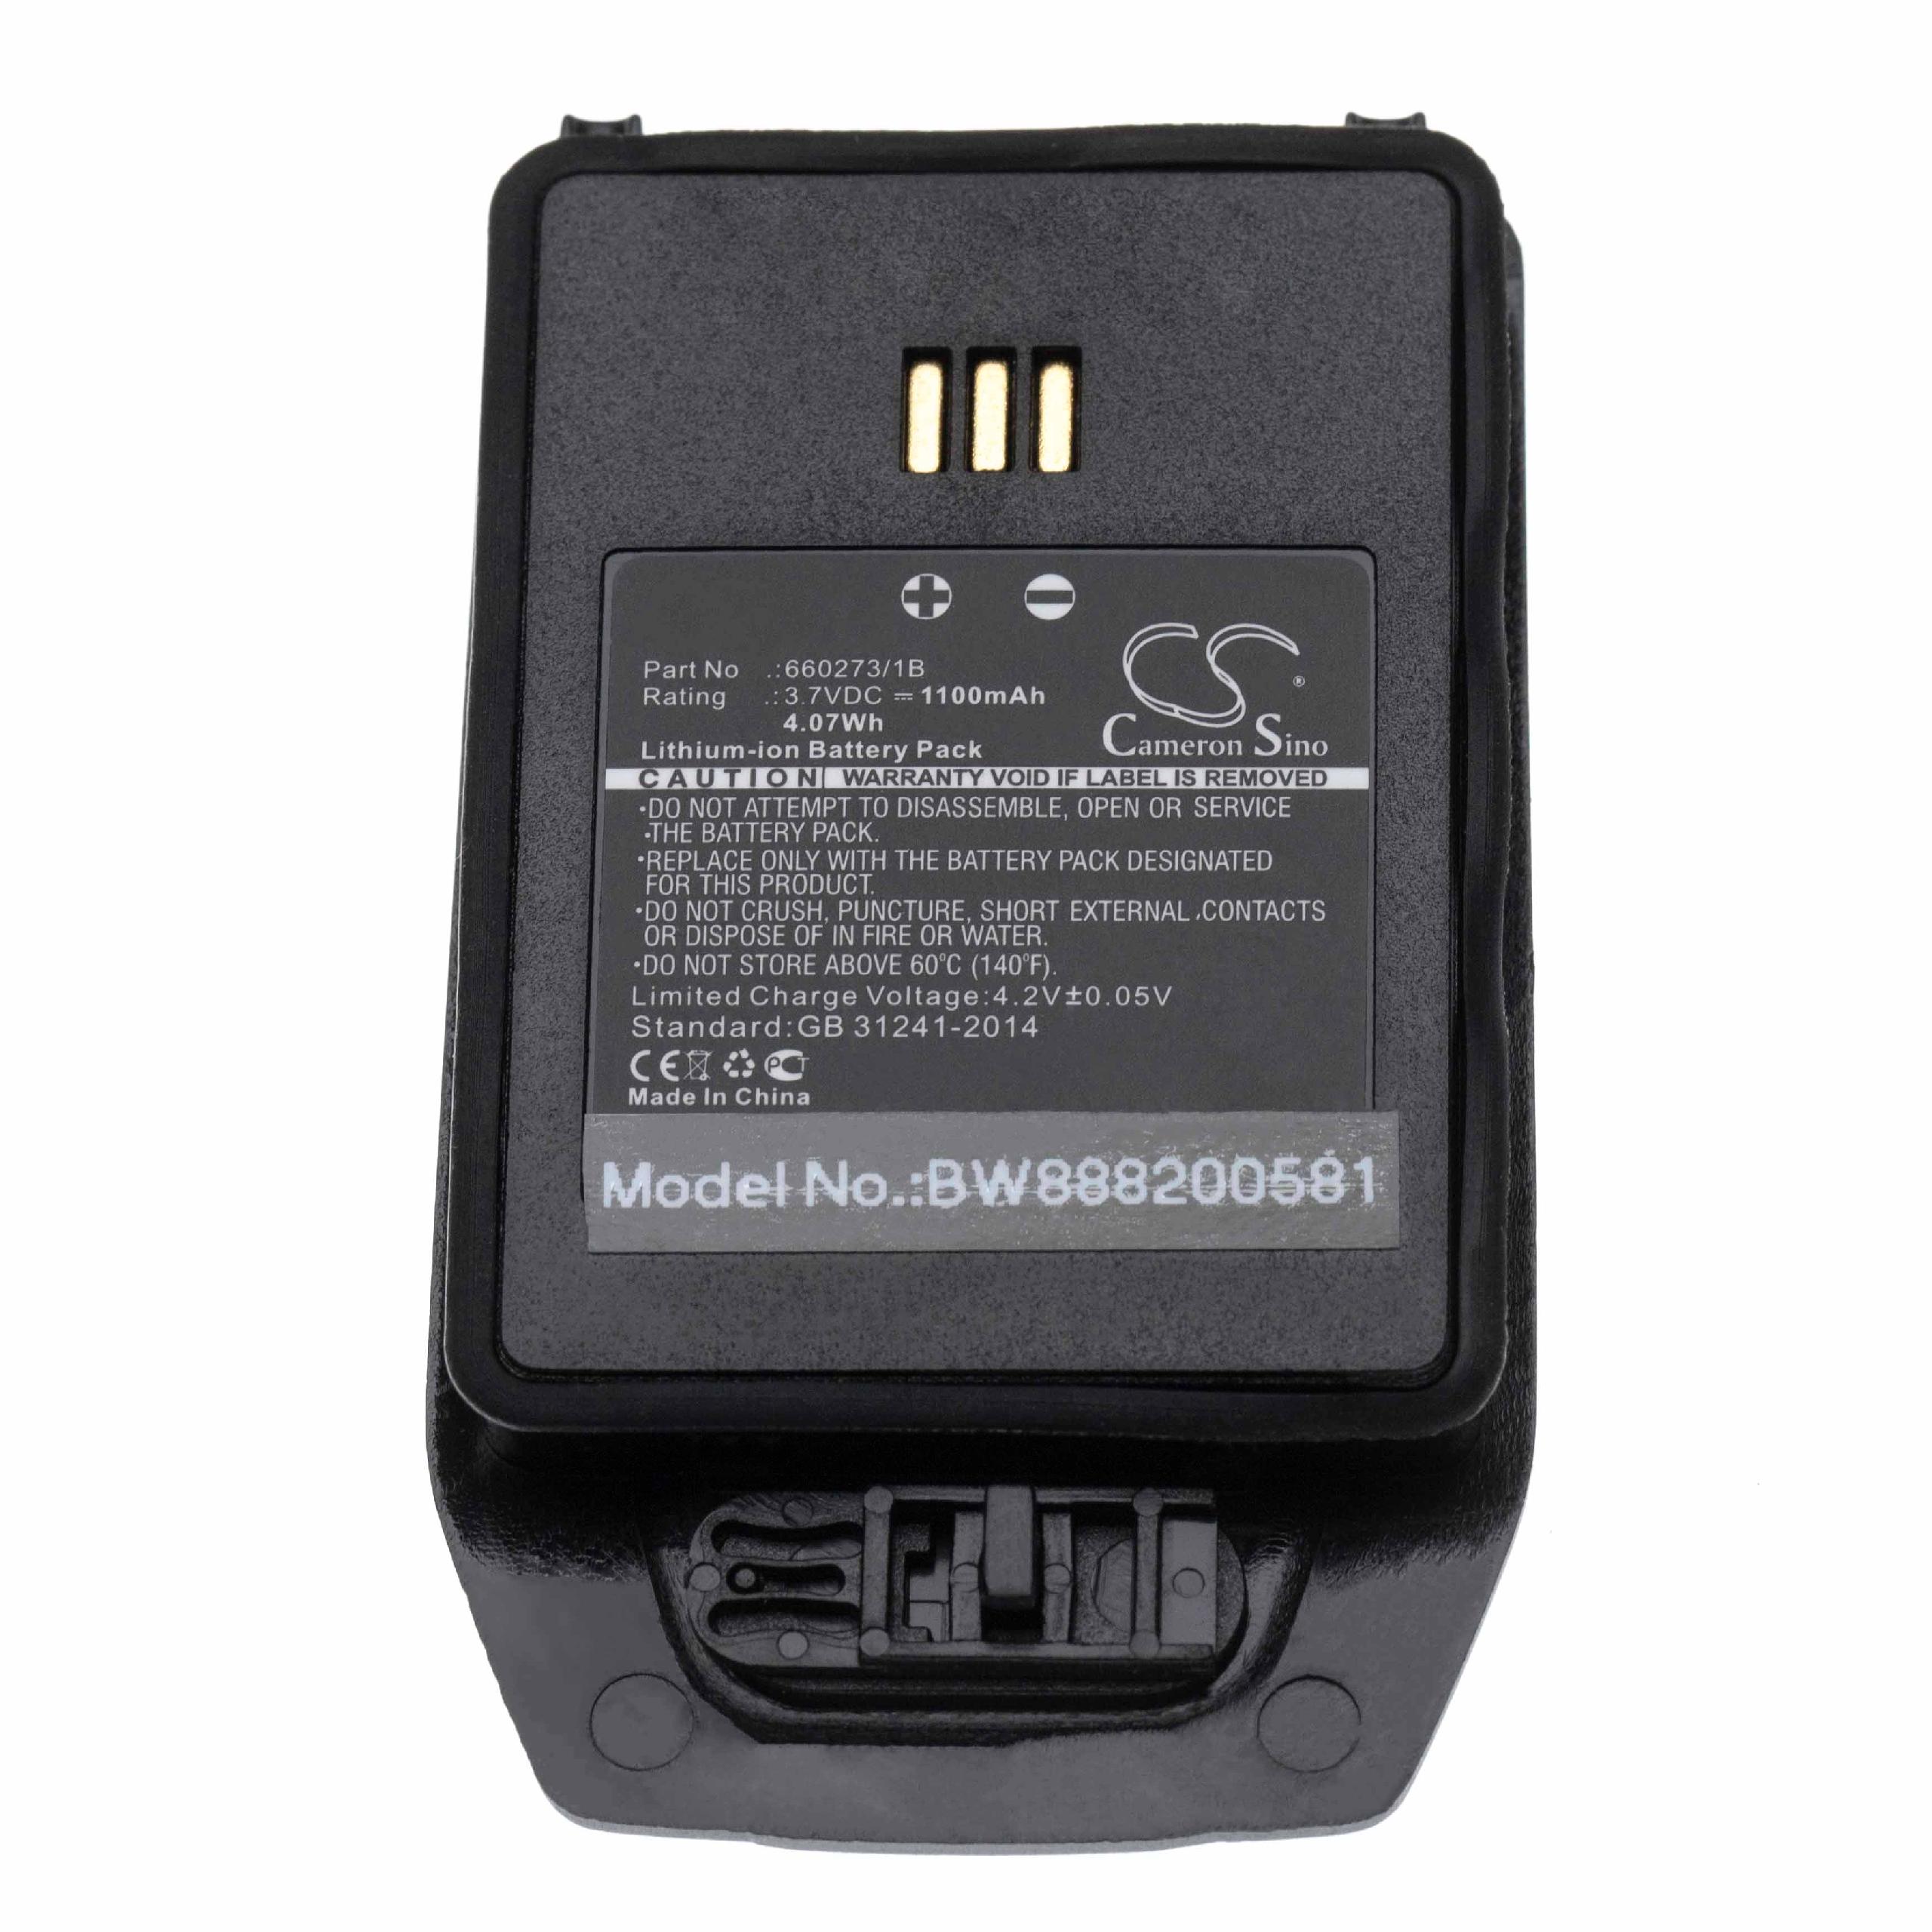 Mobile Phone Battery Replacement for Ascom 1220187, 660273/1B - 1100mAh 3.7V Li-Ion